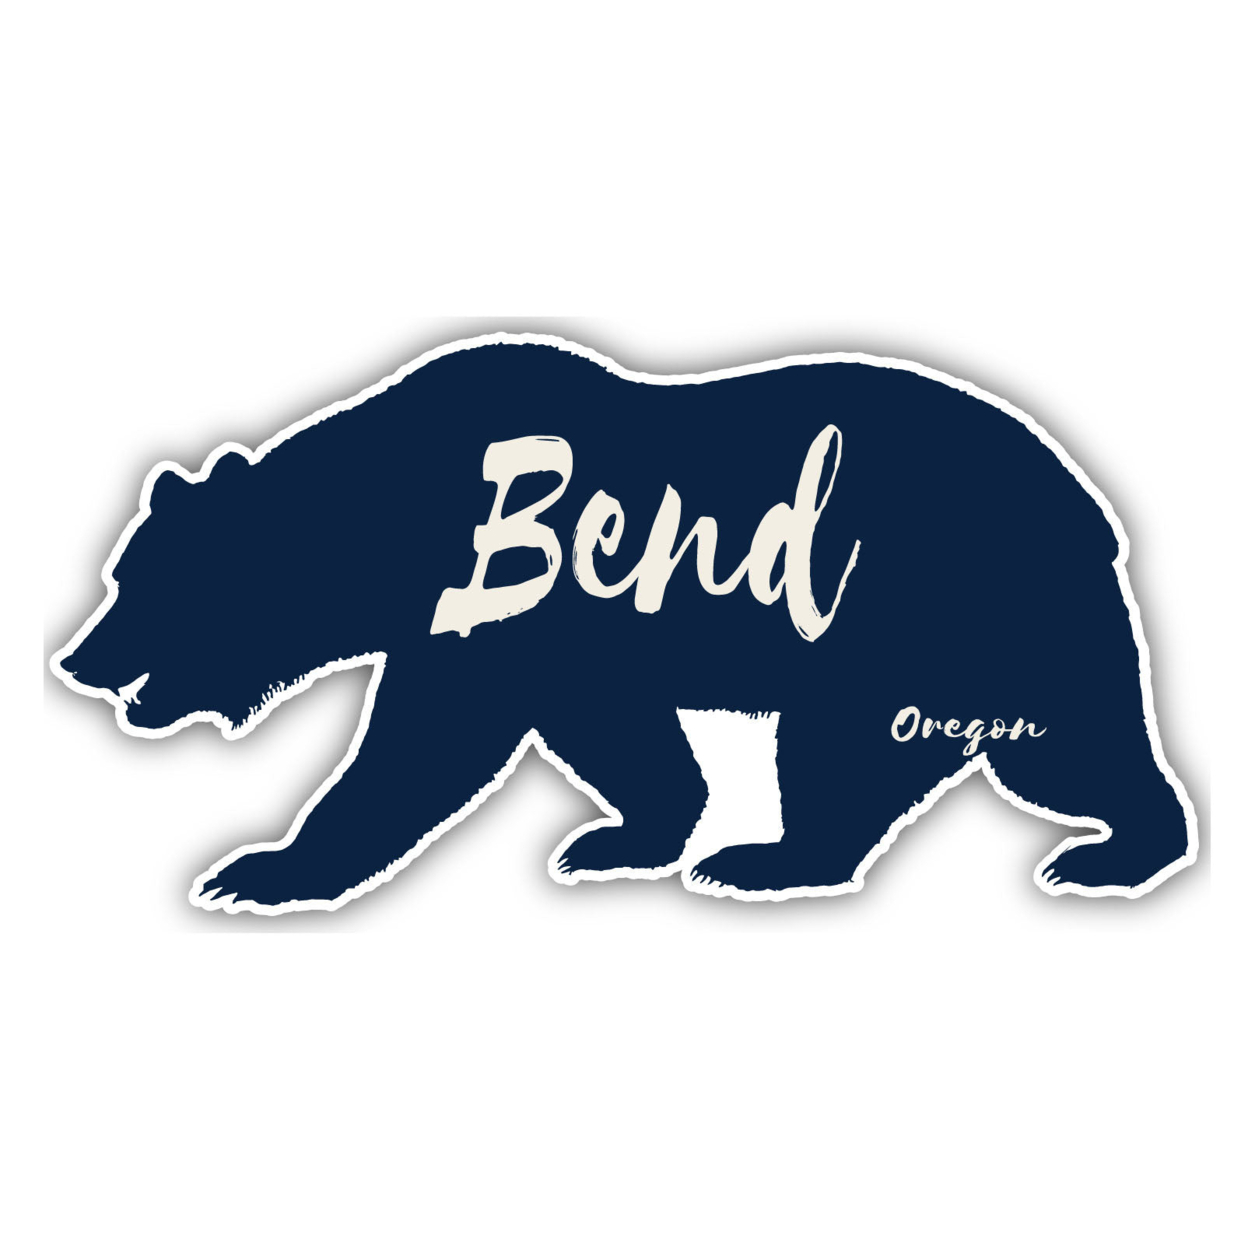 Bend Oregon Souvenir Decorative Stickers (Choose Theme And Size) - 4-Pack, 12-Inch, Bear